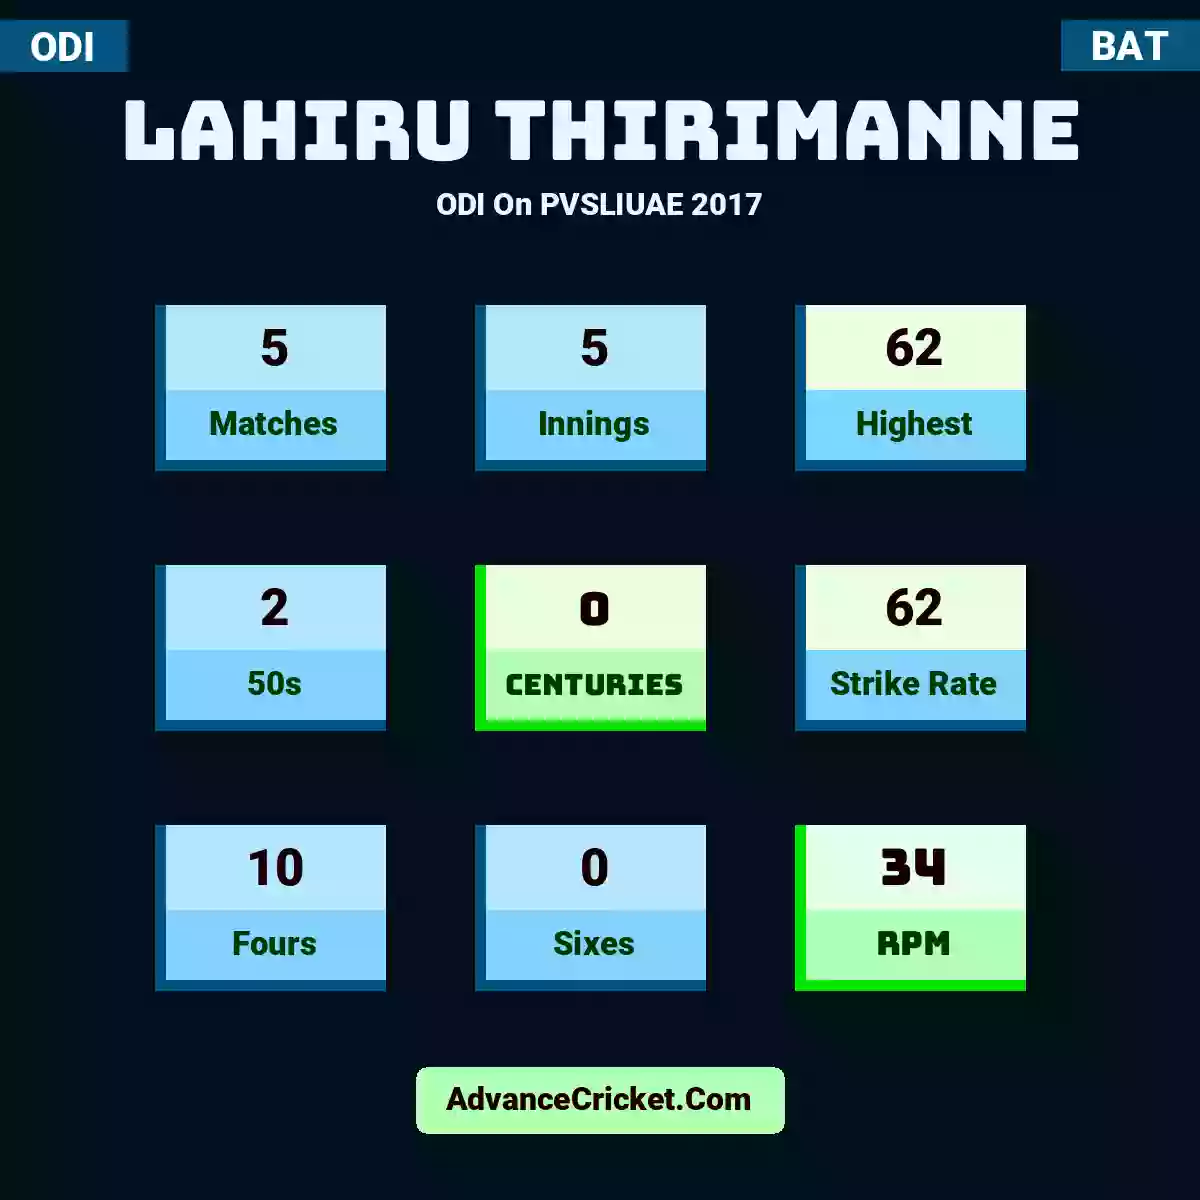 Lahiru Thirimanne ODI  On PVSLIUAE 2017, Lahiru Thirimanne played 5 matches, scored 62 runs as highest, 2 half-centuries, and 0 centuries, with a strike rate of 62. L.Thirimanne hit 10 fours and 0 sixes, with an RPM of 34.